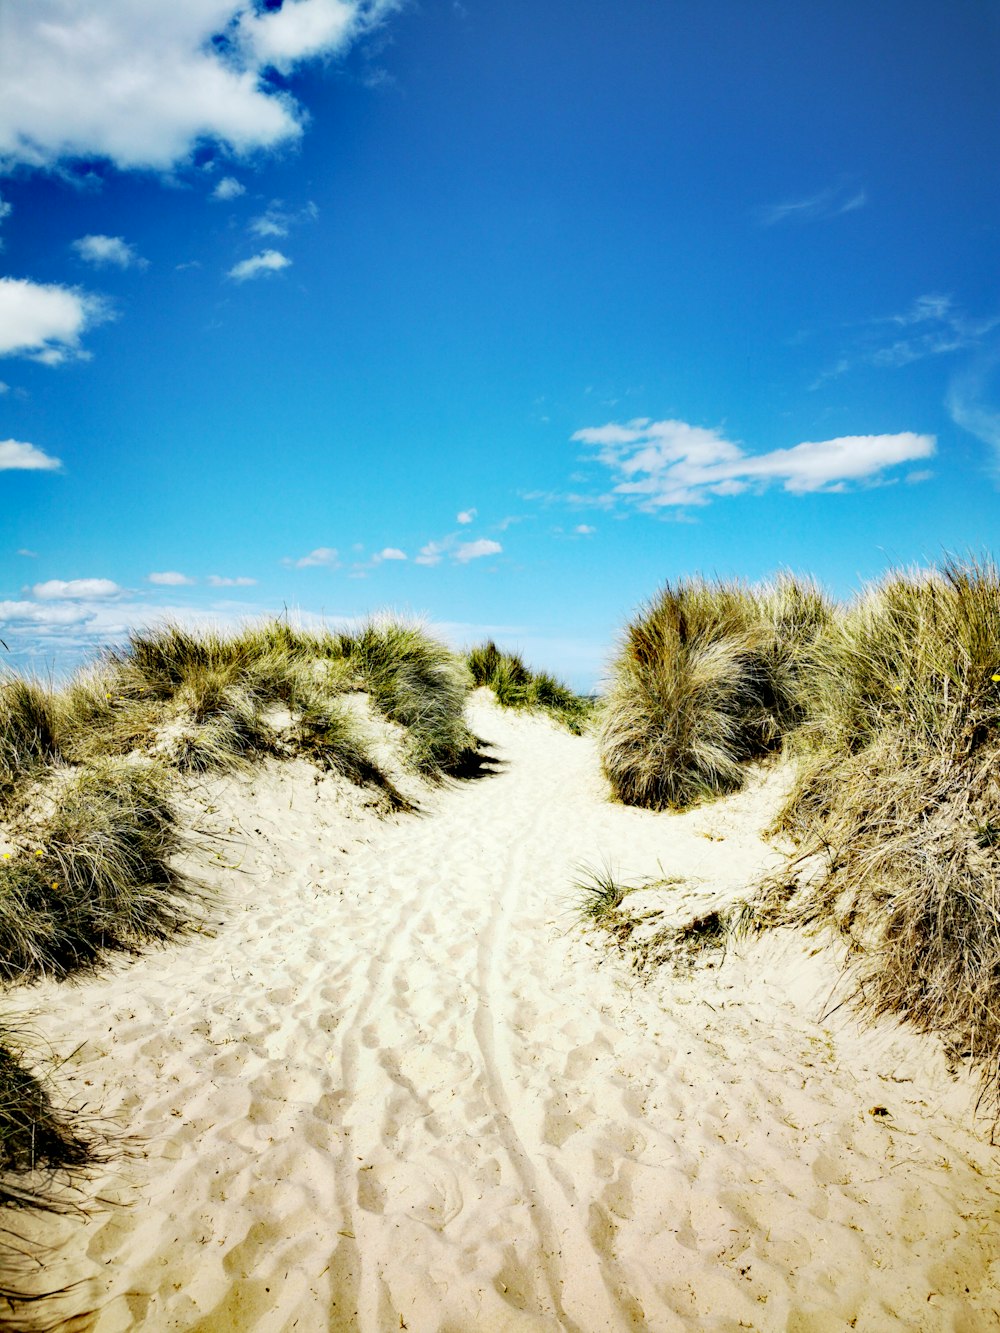 a sandy beach with grass and blue sky